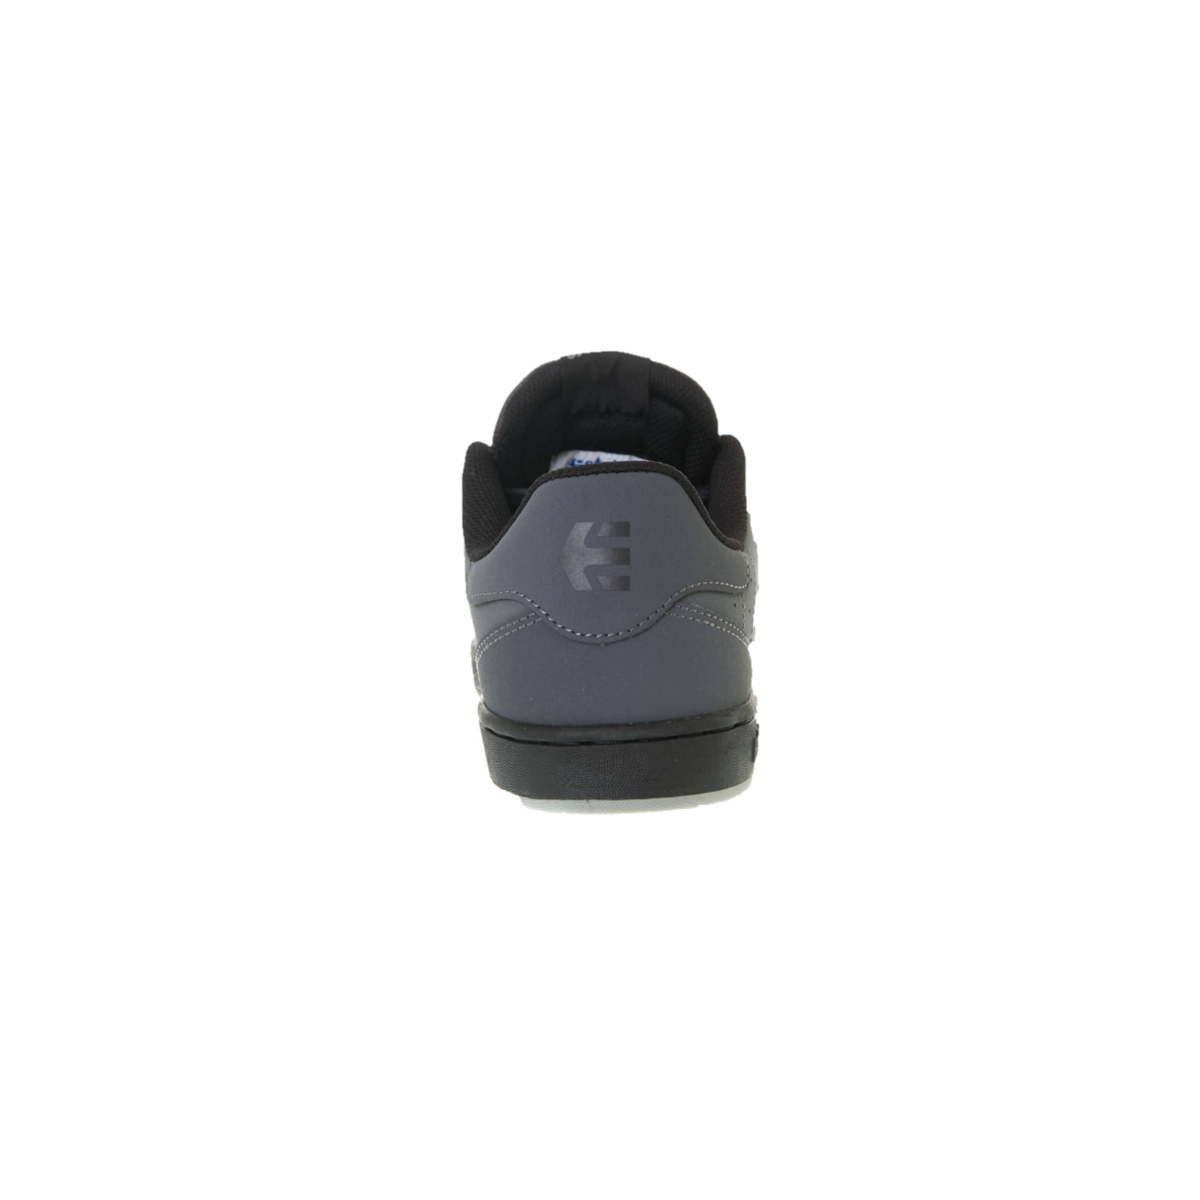 ETNIES 4101000416 022 FADER LS MN'S (Medium) Dark Grey/Black Nubuck Skate Shoes